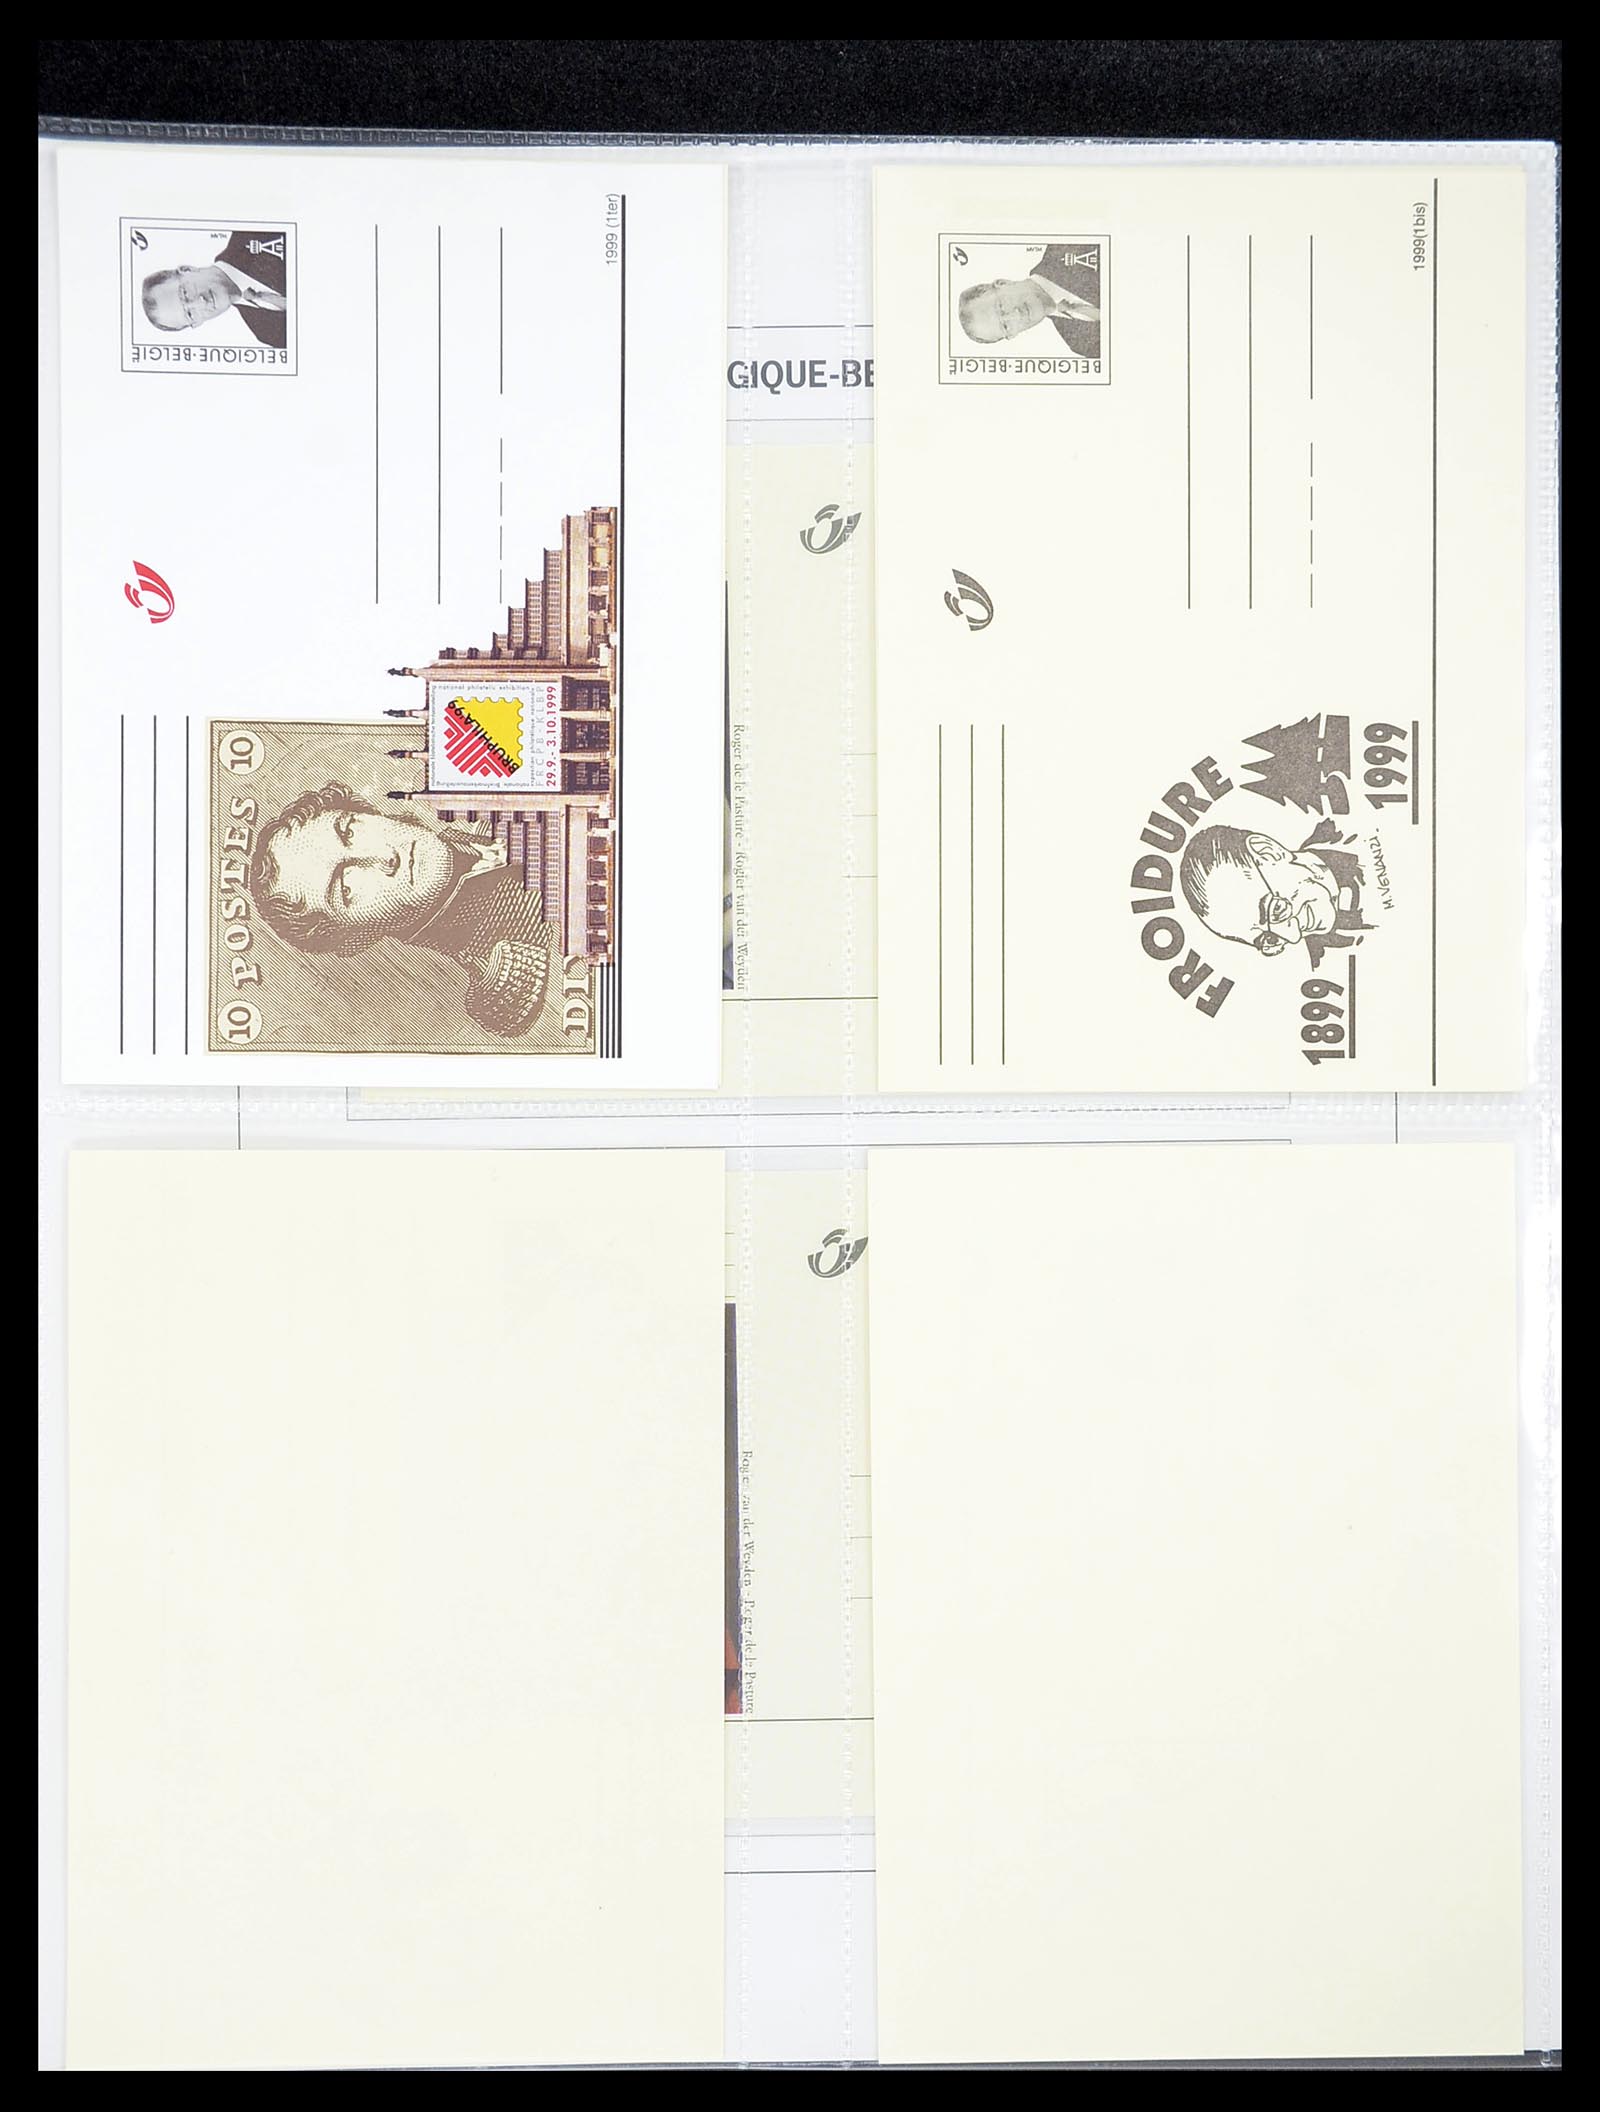 34639 047 - Stamp Collection 34639 Belgium postal cards 1971-2010.